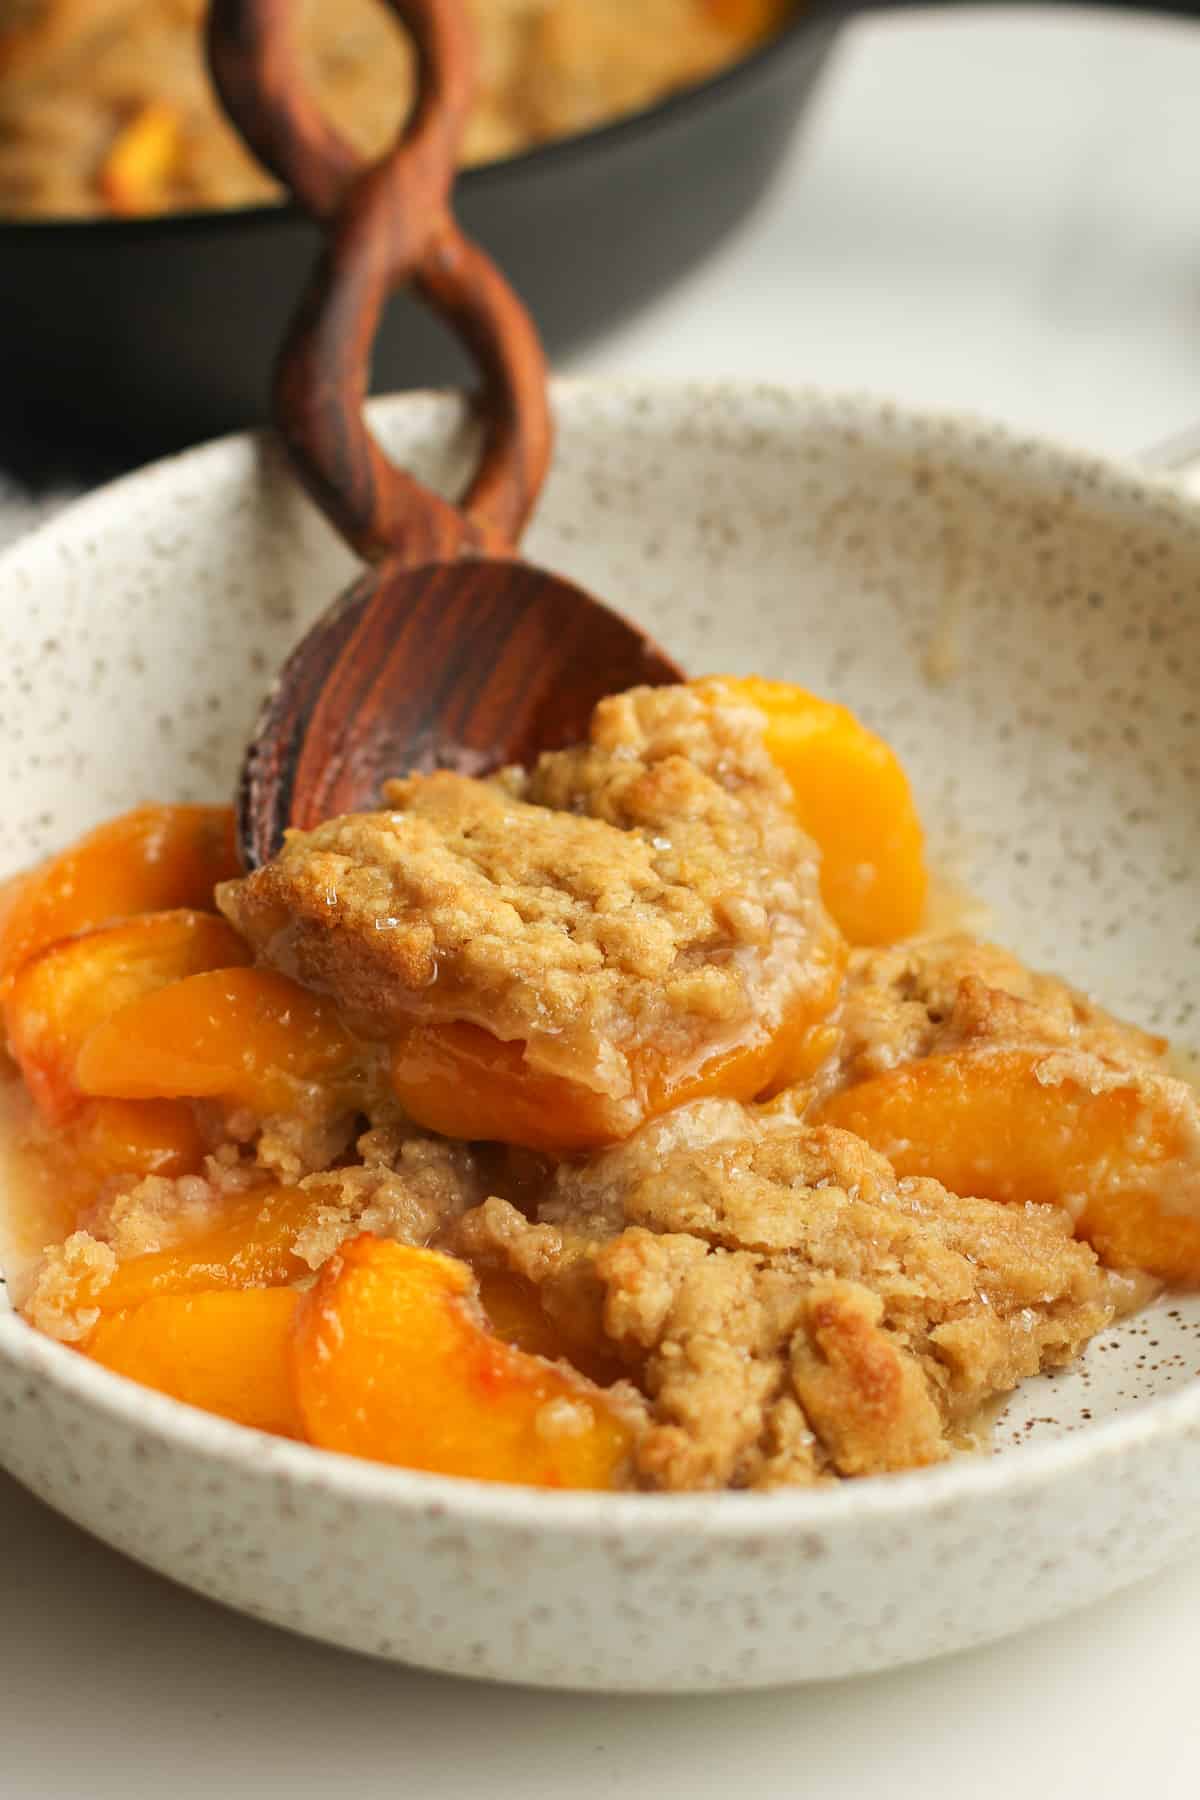 A wooden spoon serving a bowl of peach cobbler.